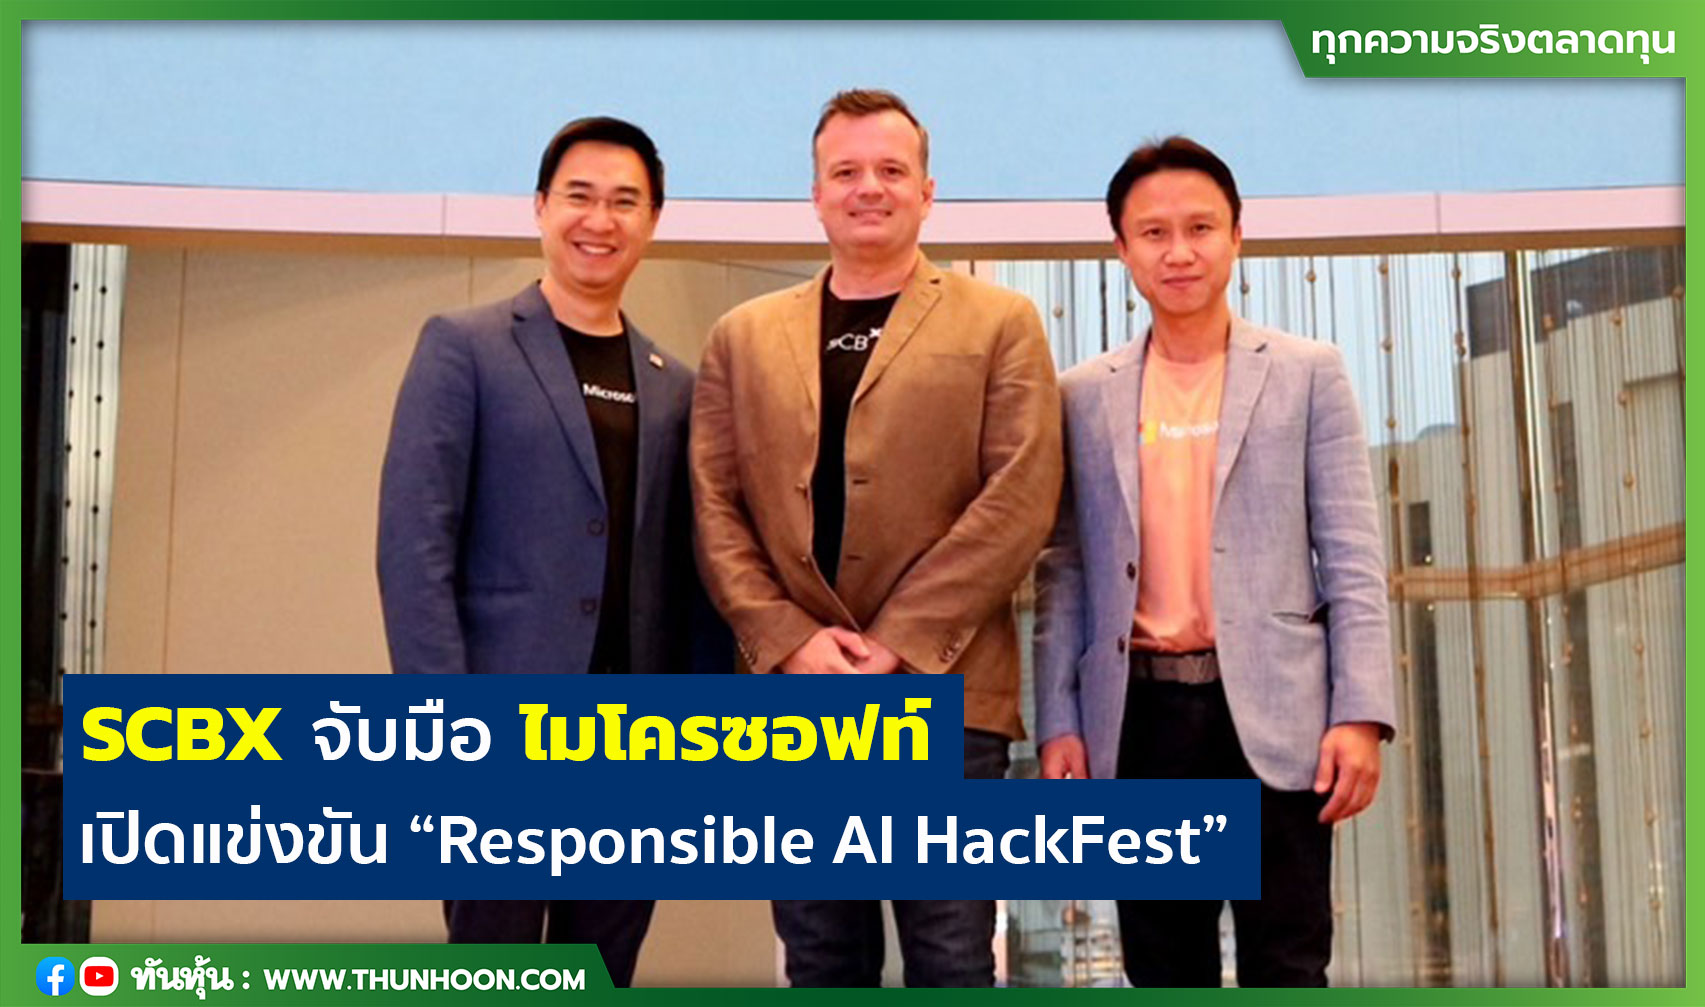 SCBX จับมือไมโครซอฟท์ เปิดแข่งขัน “Responsible AI HackFest”